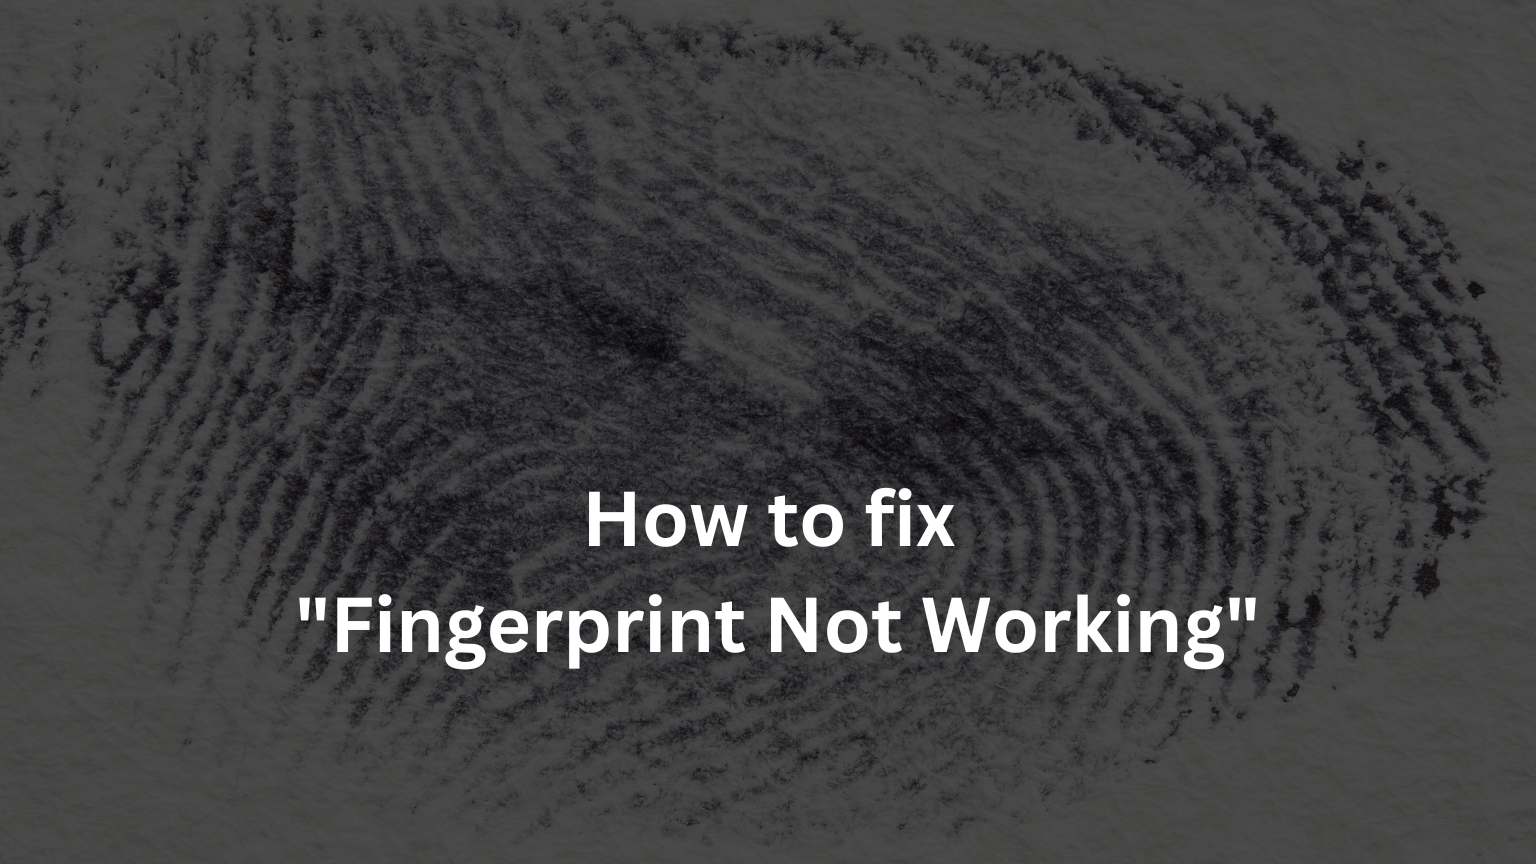 How to fix "Fingerprint Not Working"